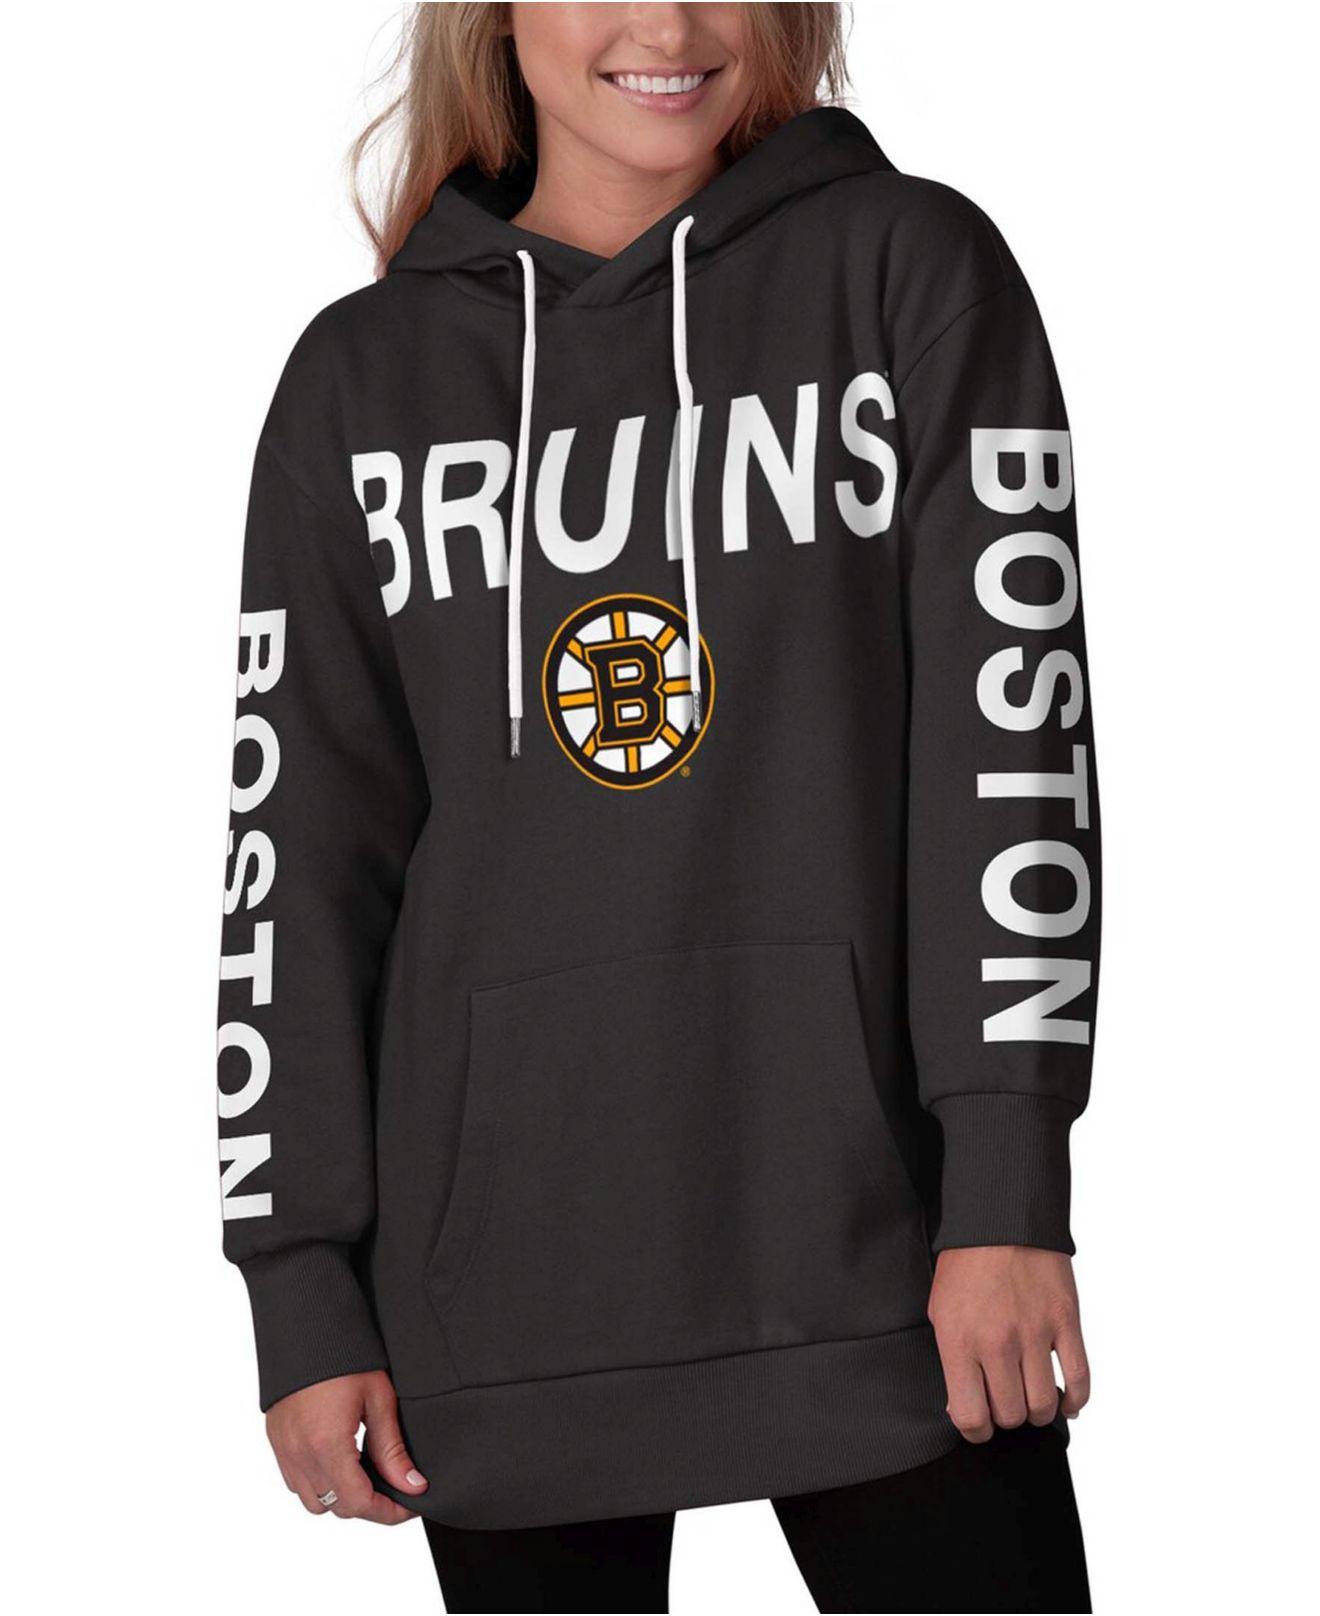 G-III Sports Womens Zboston Bruins Hoodie Sweatshirt, Grey, Medium